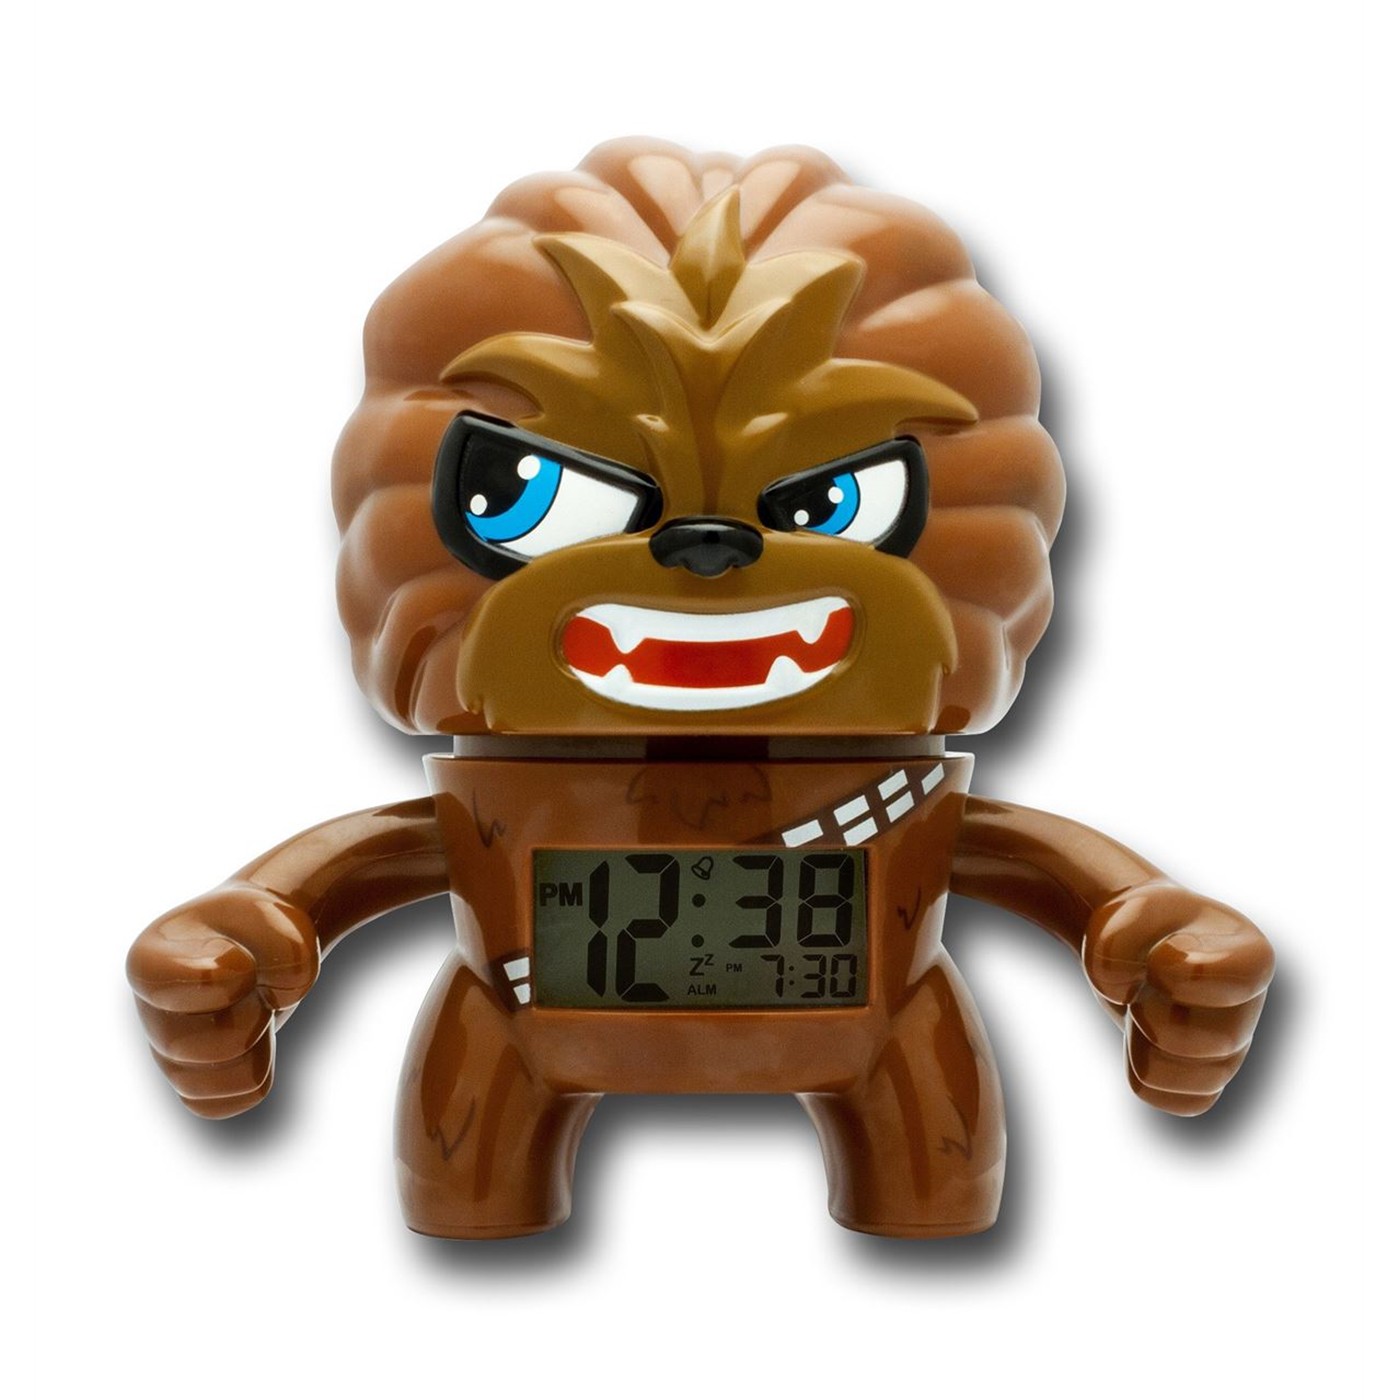 Star Wars Chewbacca Bulb Botz Clock